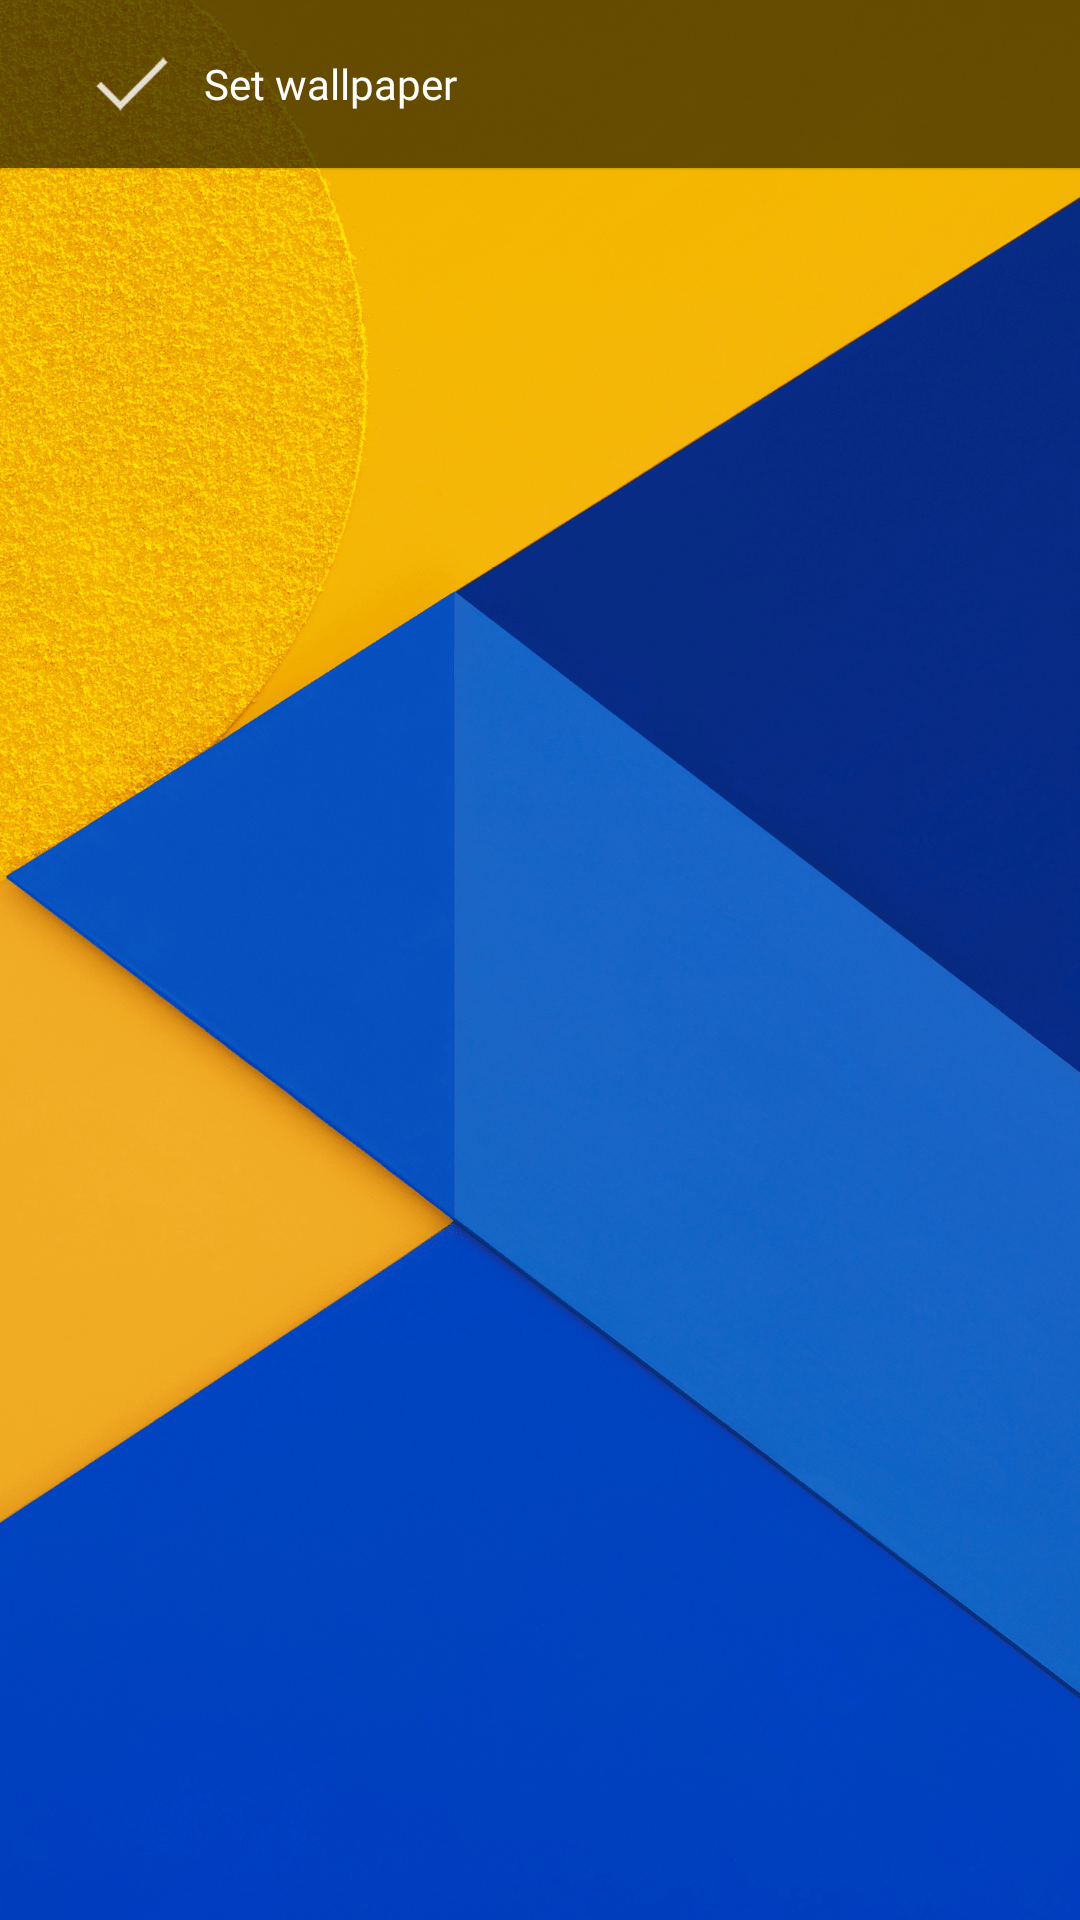 launcher wallpaper hd,blue,orange,cobalt blue,yellow,electric blue